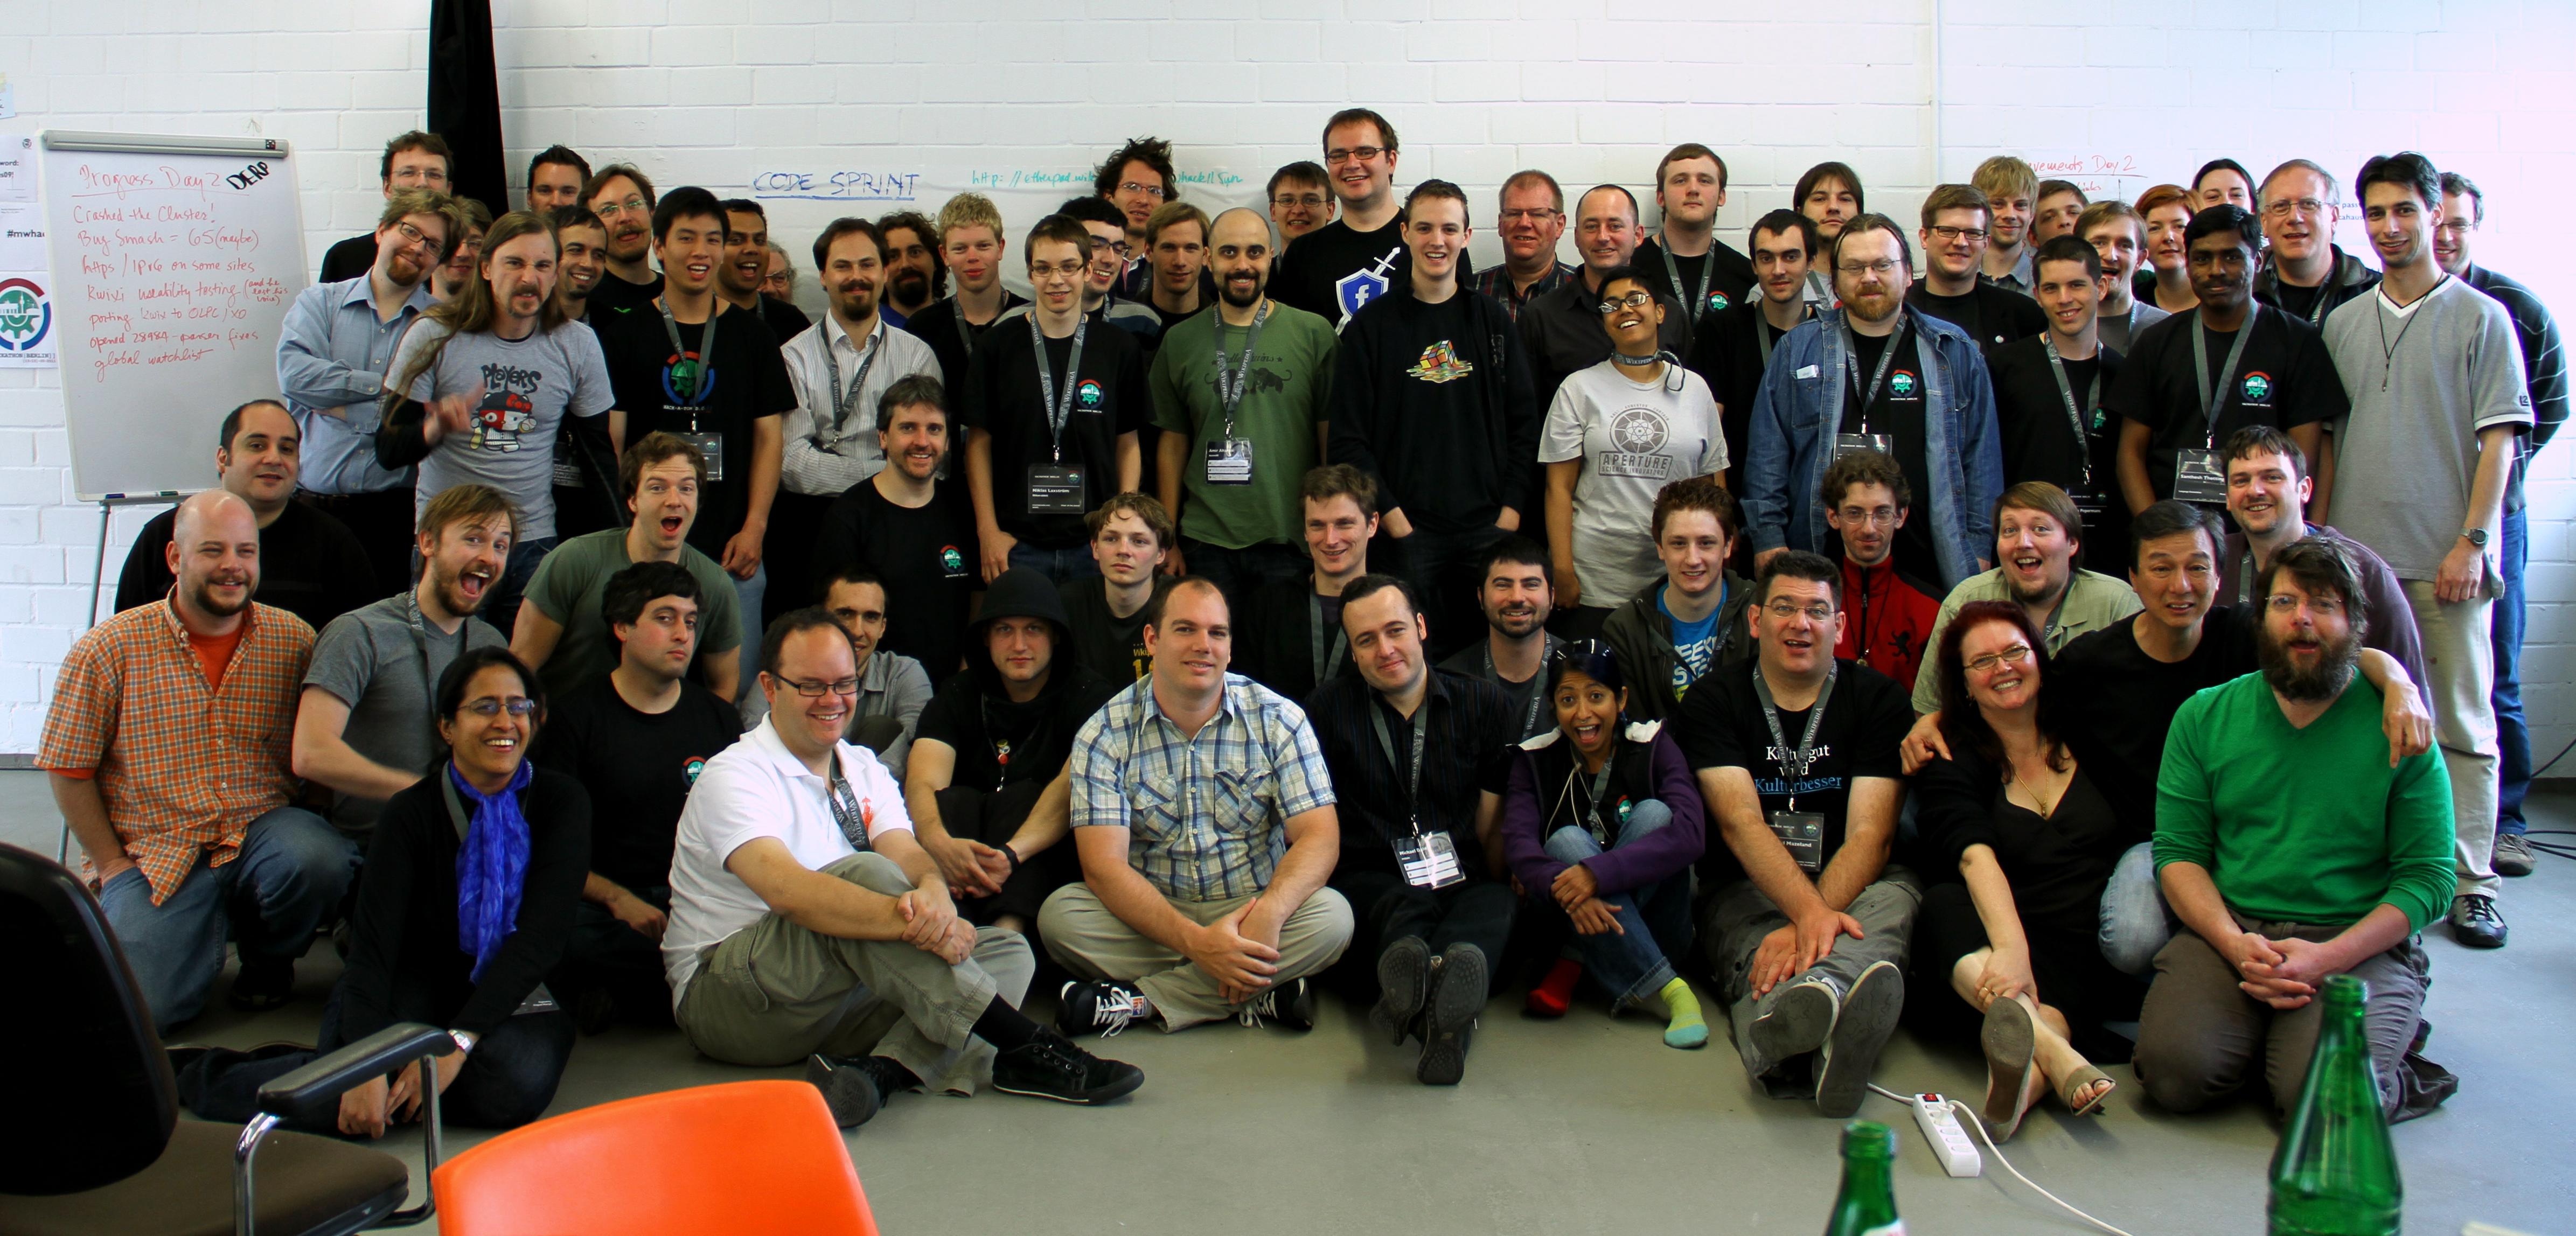 Wikimedia Hackathon Berlin 2011 group photo